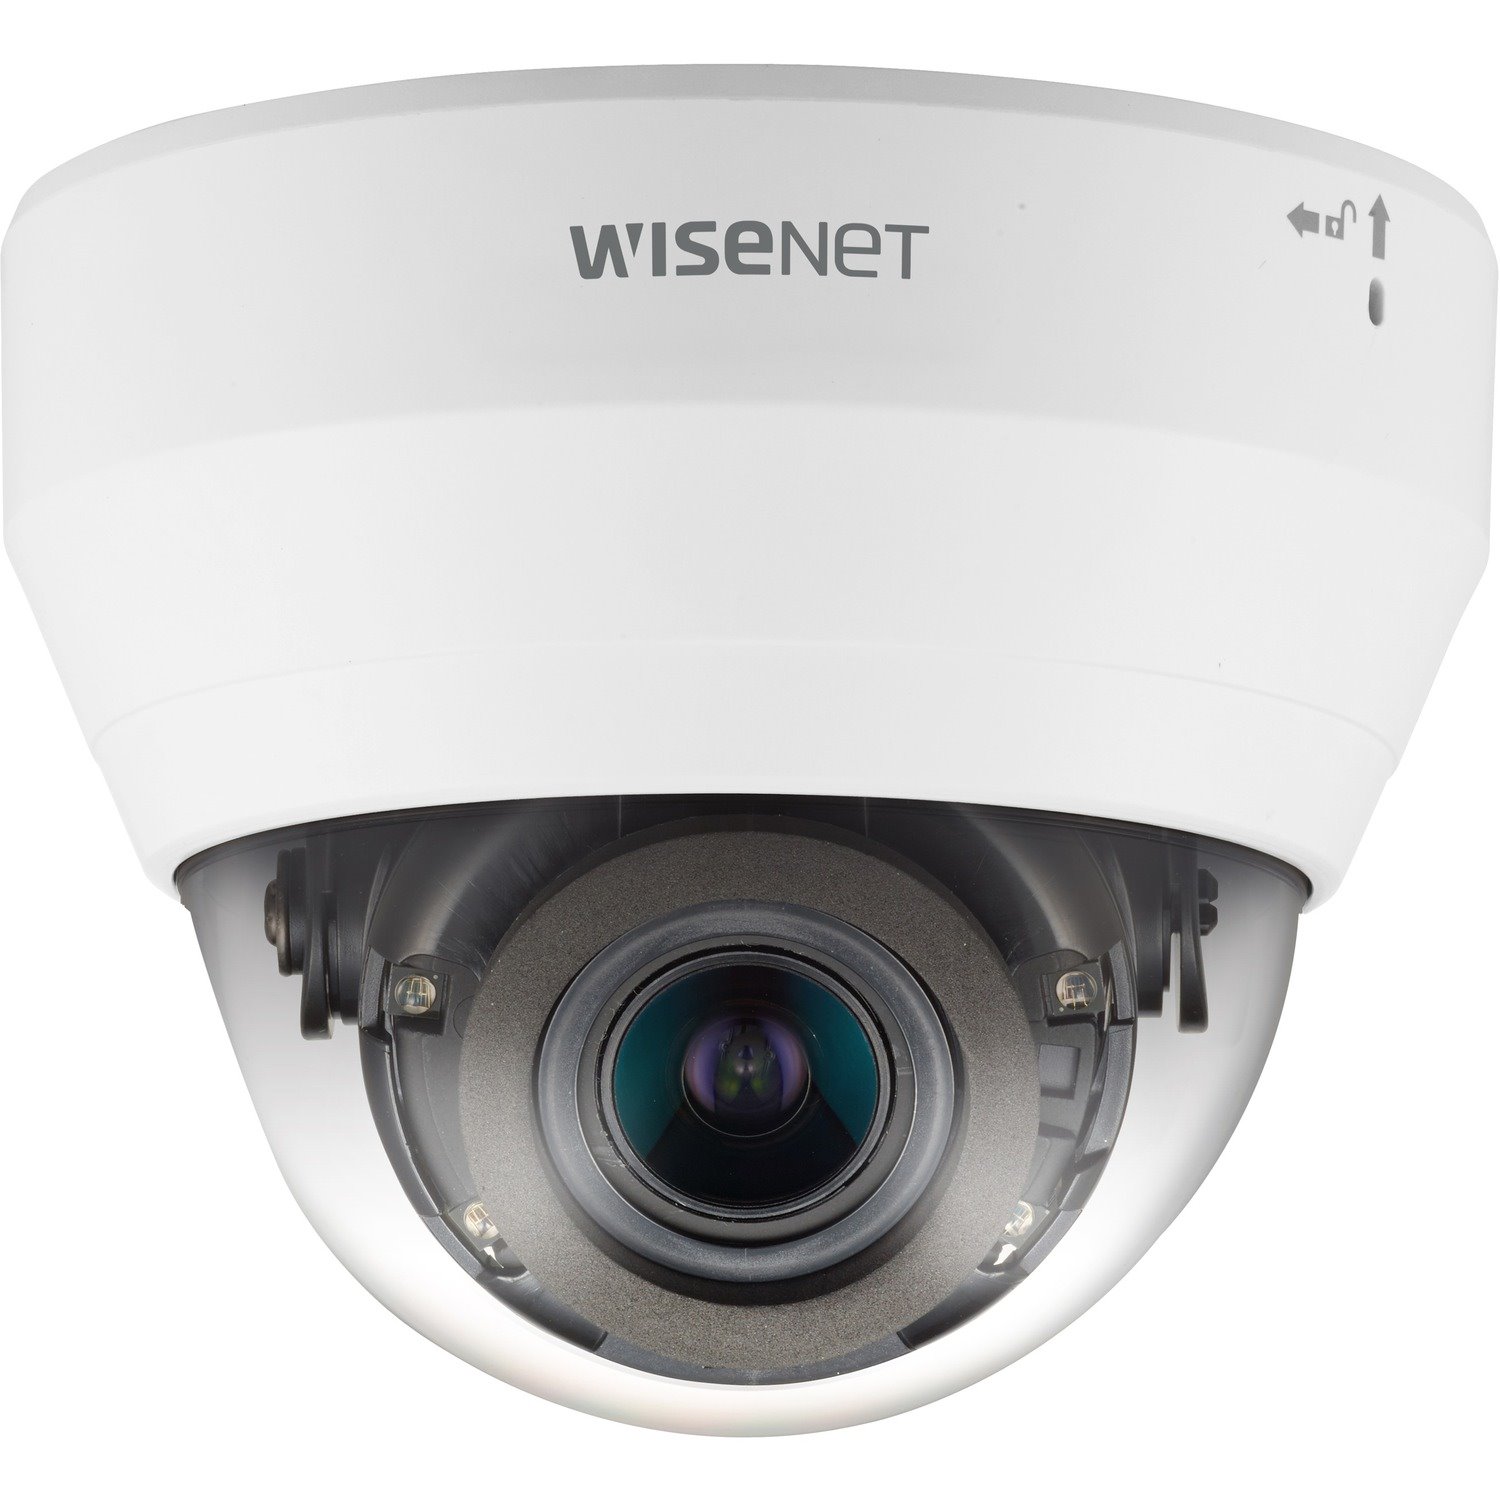 Wisenet QND-6082R 2 Megapixel HD Network Camera - Monochrome - Dome - White